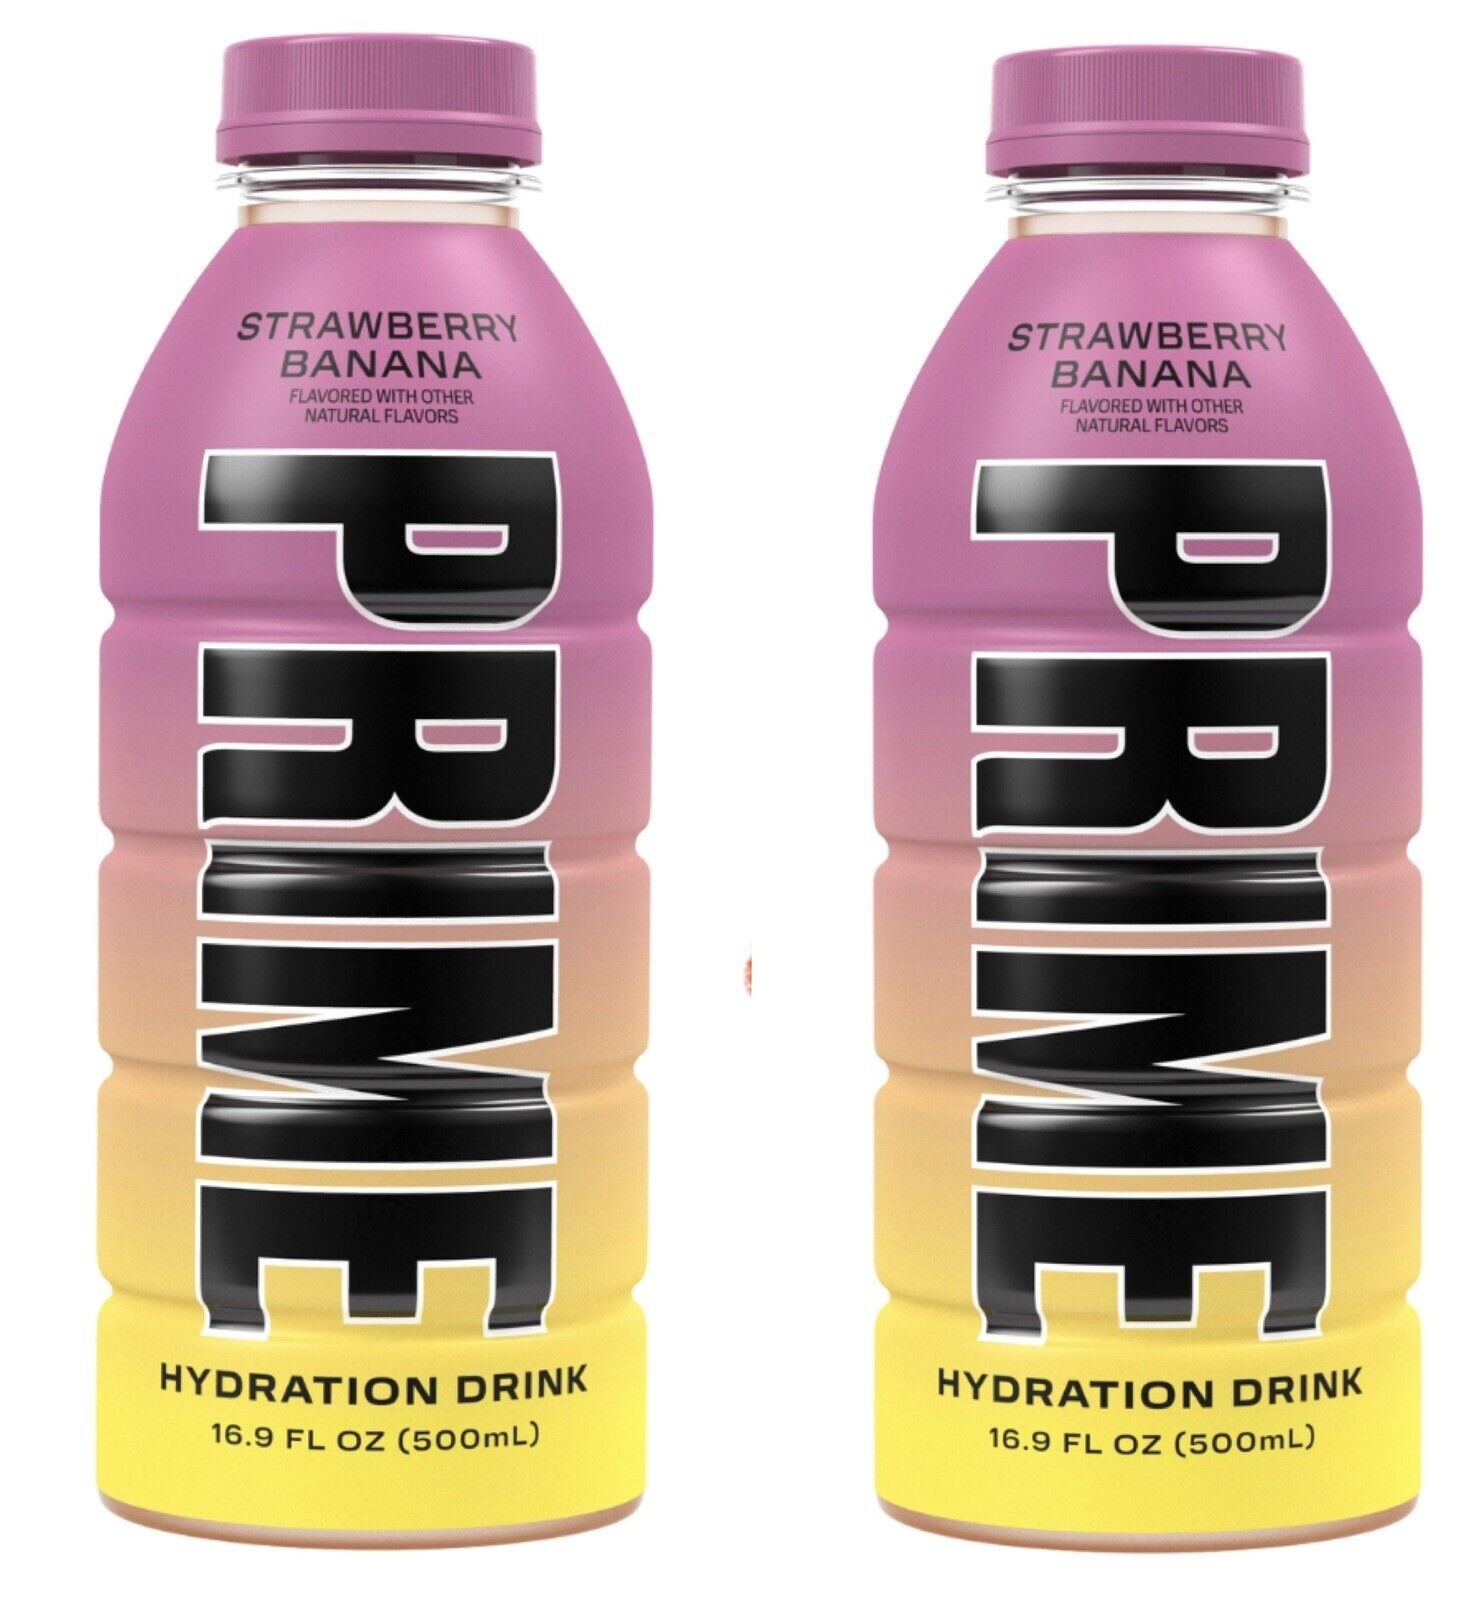 2 Logan Paul PRIME Hydration Drinks New STRAWBERRY BANANA Sealed KSI NEW